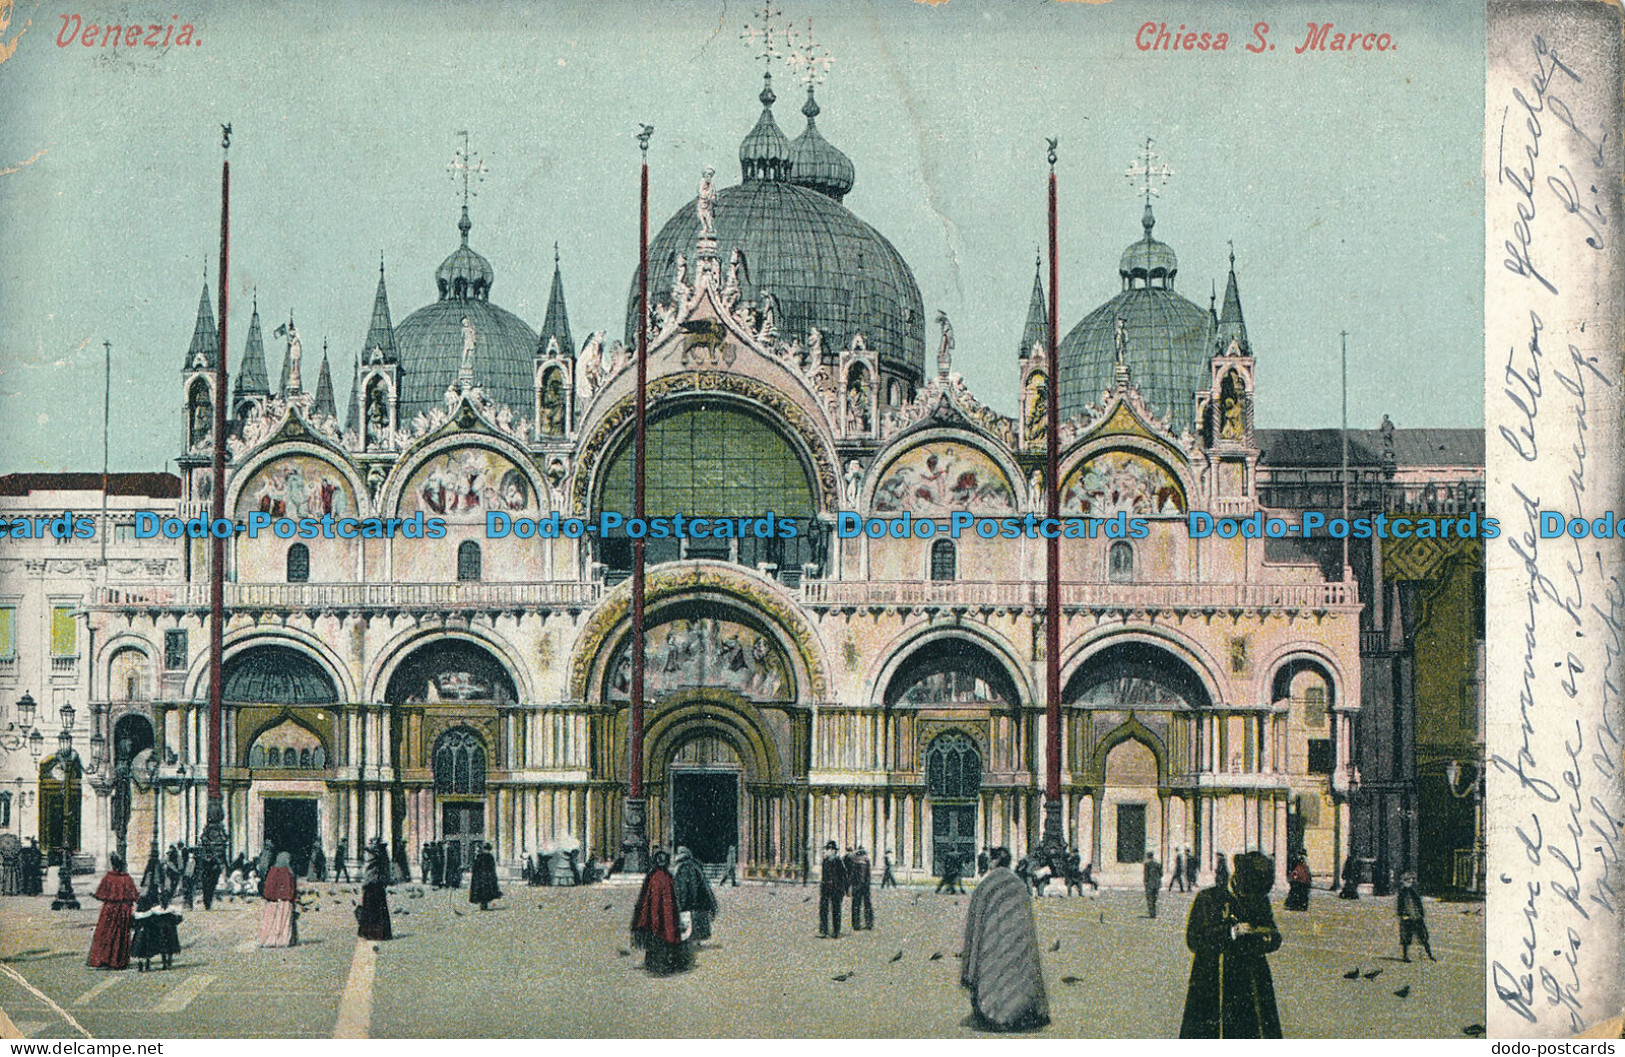 R032312 Venezia. Chiesa S. Marco. 1905. B. Hopkins - World